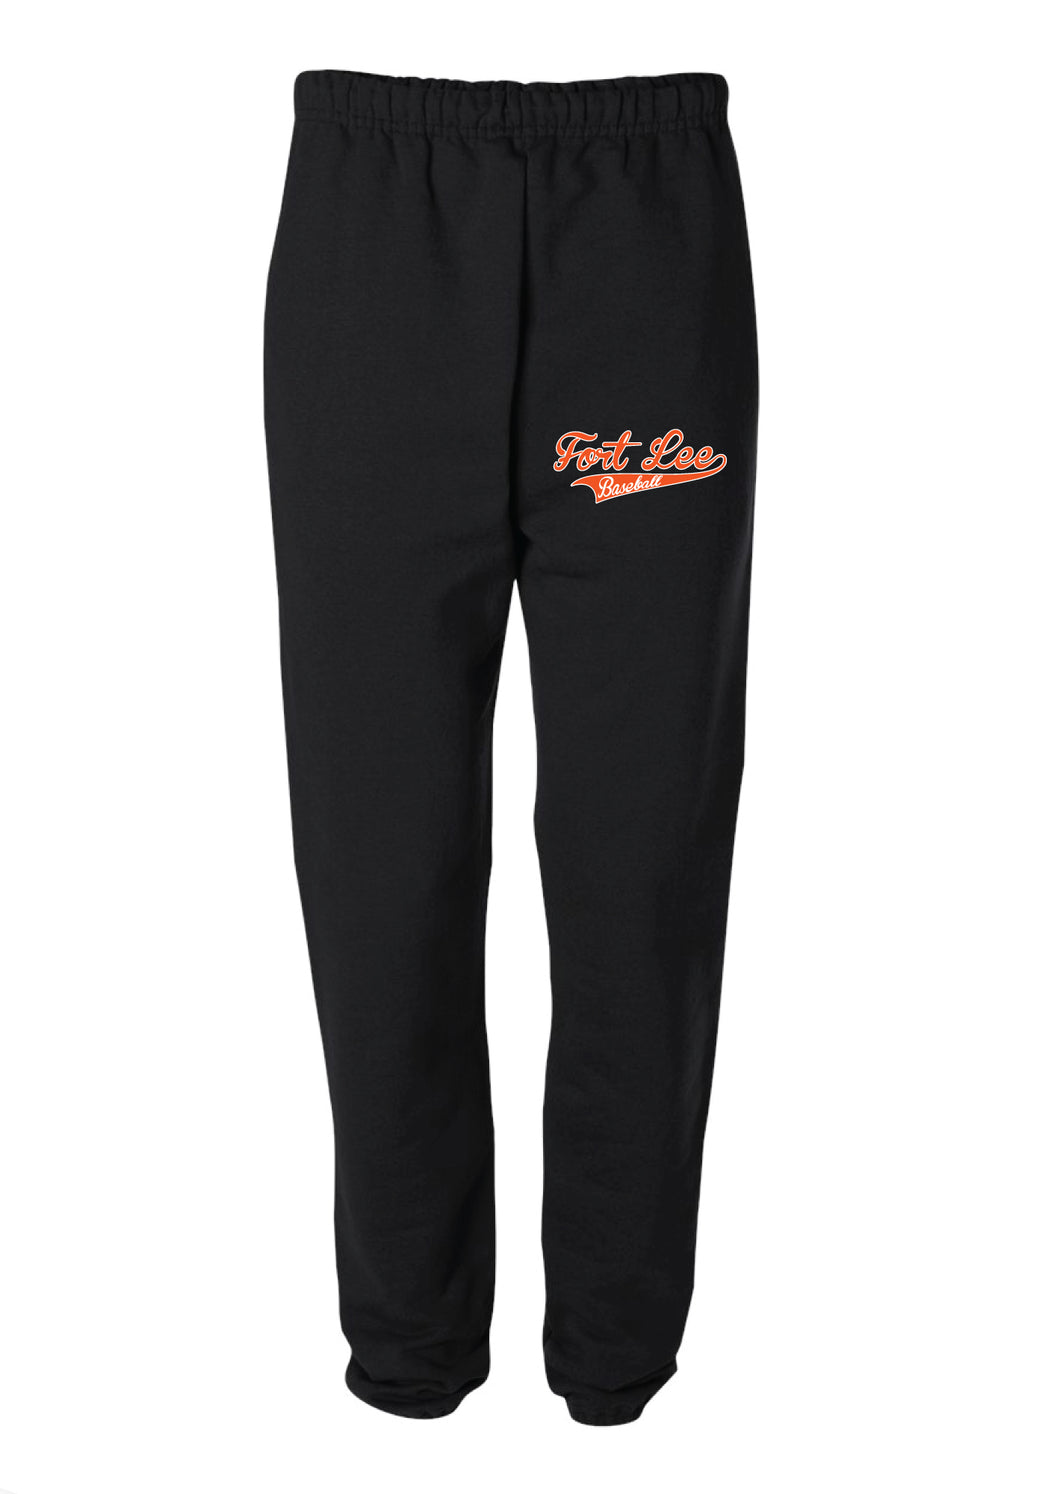 Fort Lee Baseball Cotton Sweatpants - Black - 5KounT